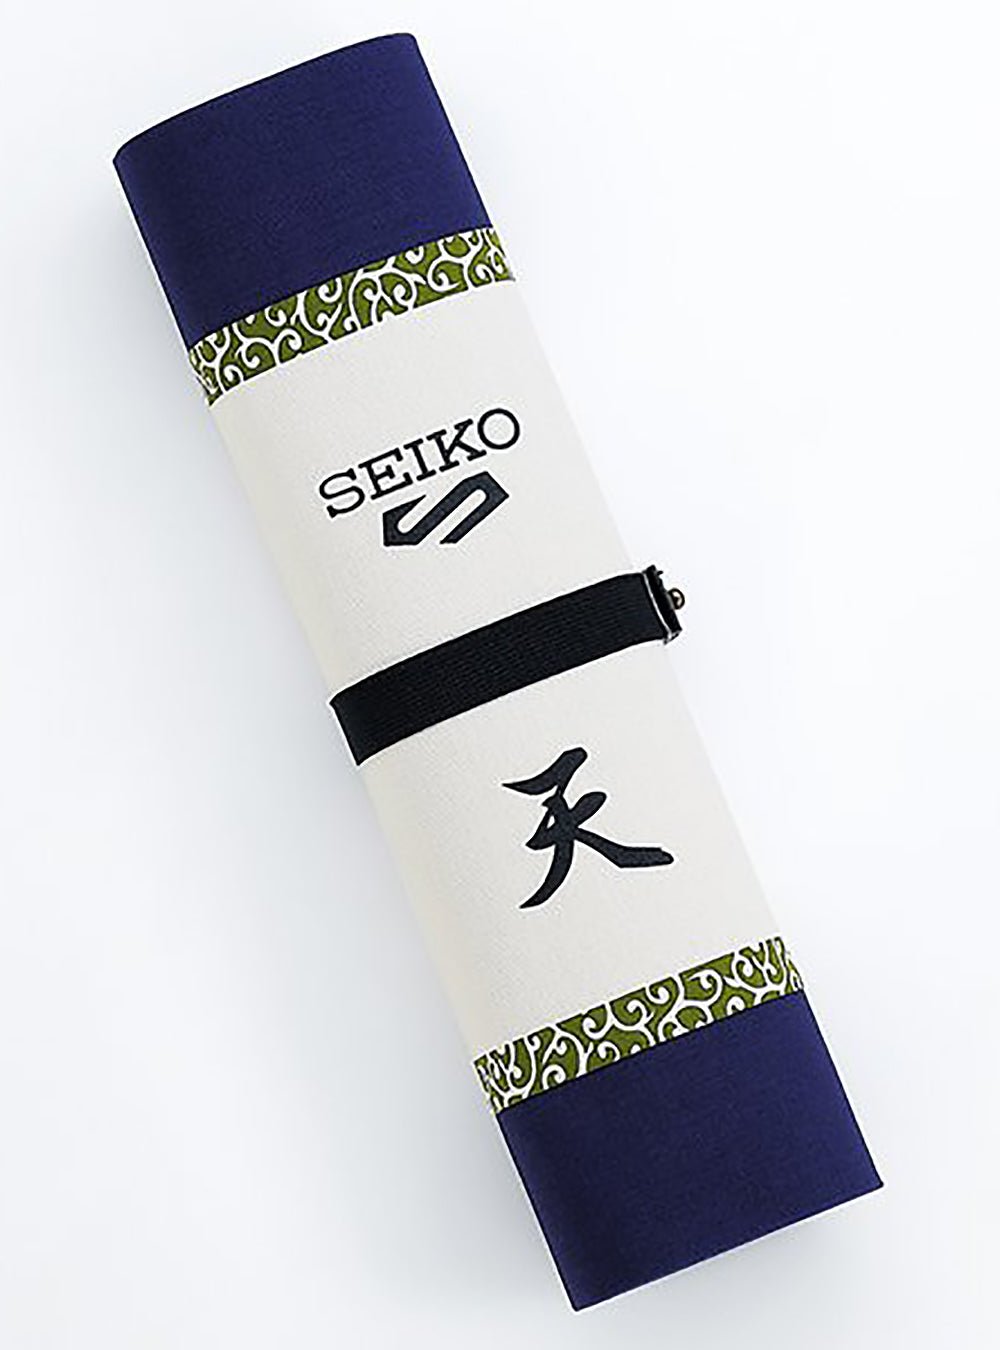 SEIKO 5 SPORTS NARUTO & BORUTO LIMITED EDITION NARUTO UZUMAKI MODEL SBSA092 MADE IN JAPAN JDMWRISTWATCHjapan-select